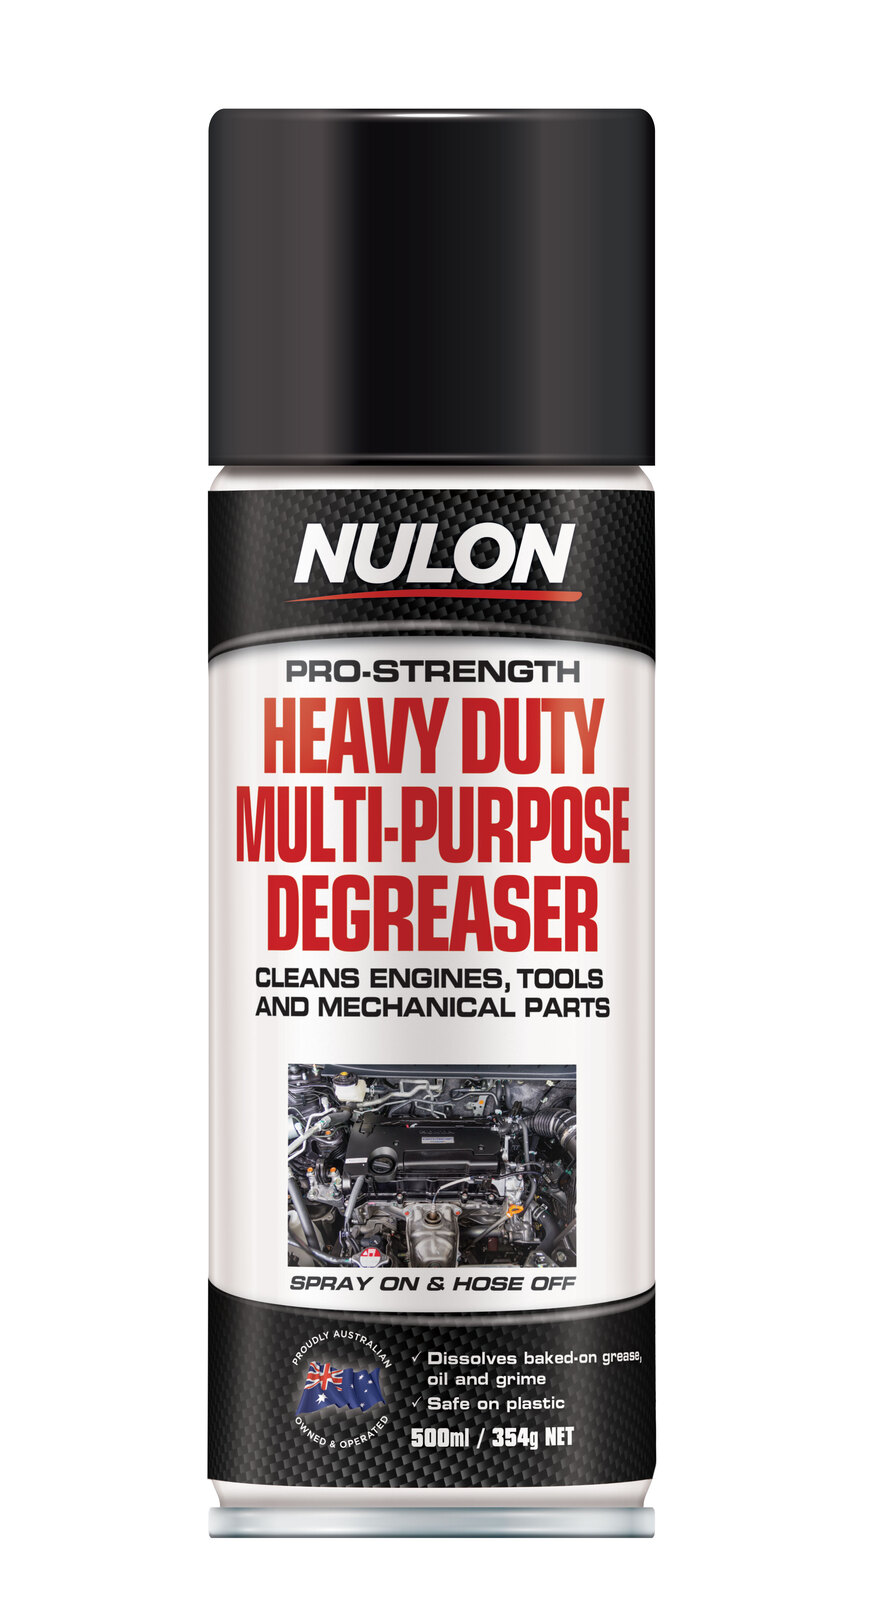 NULON 500ml Heavy Duty Engine Degreaser, Each